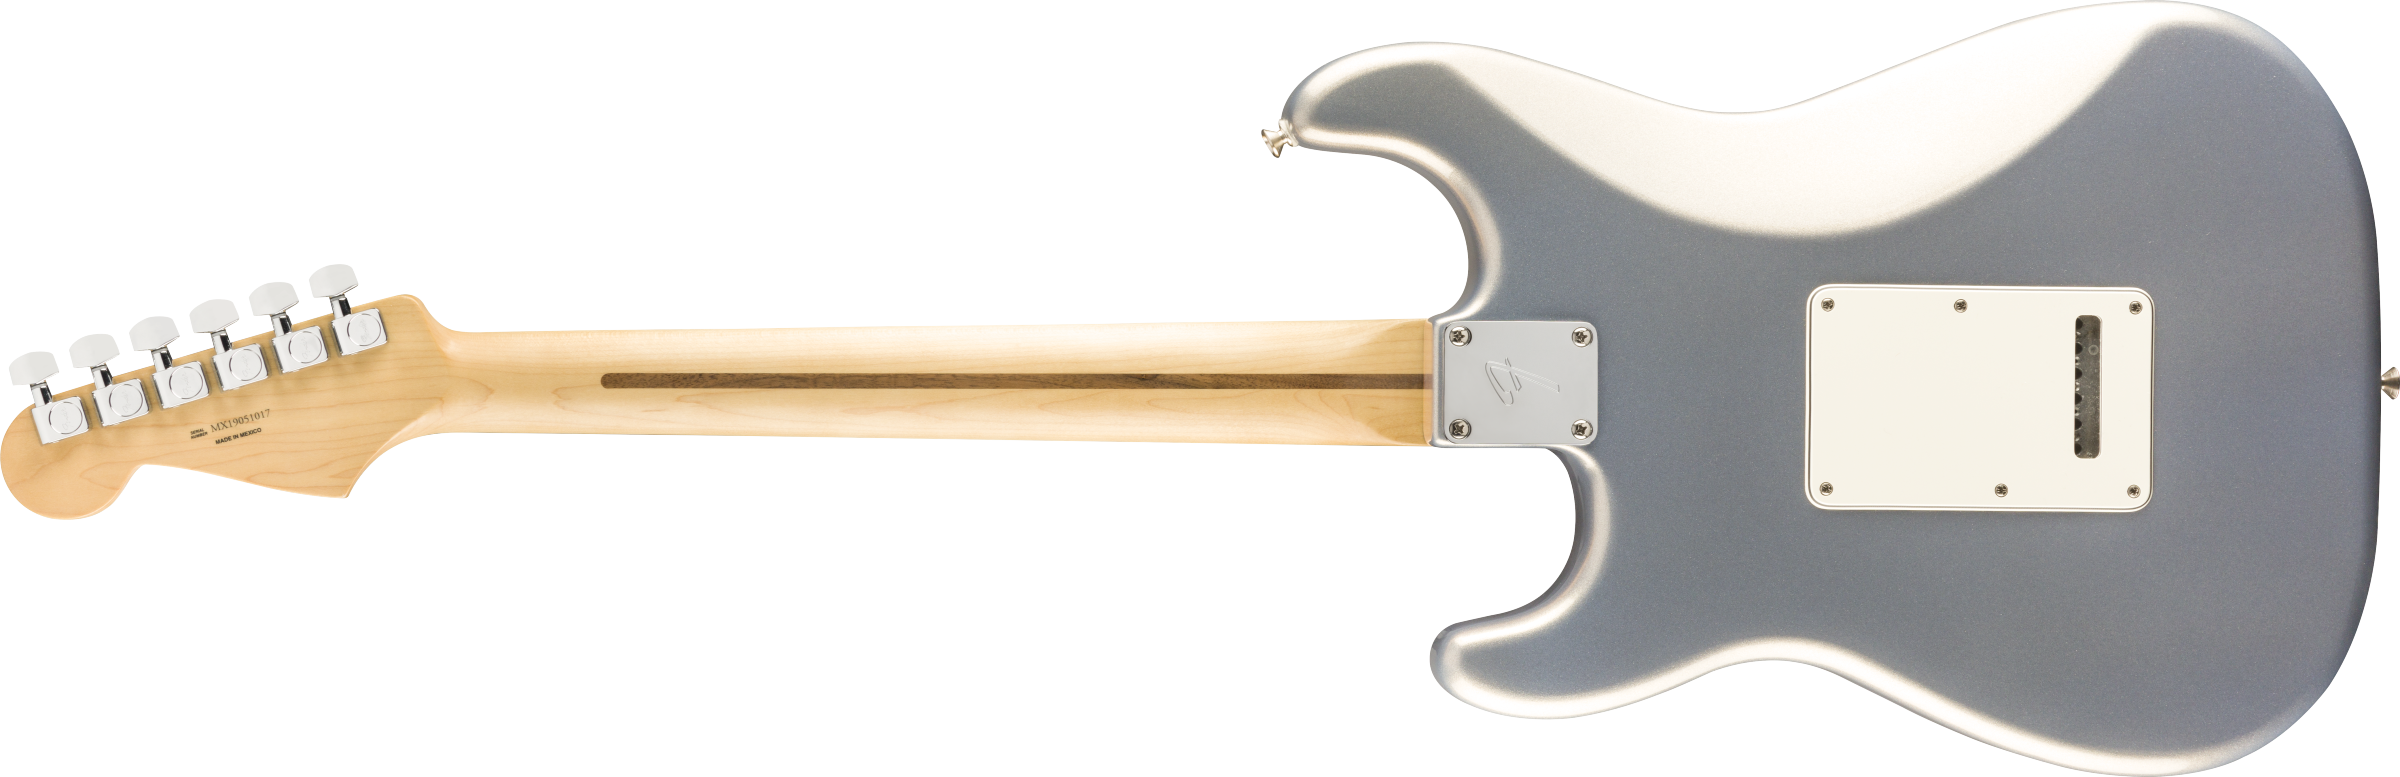 Fender Player Stratocaster - Silver 0144503581